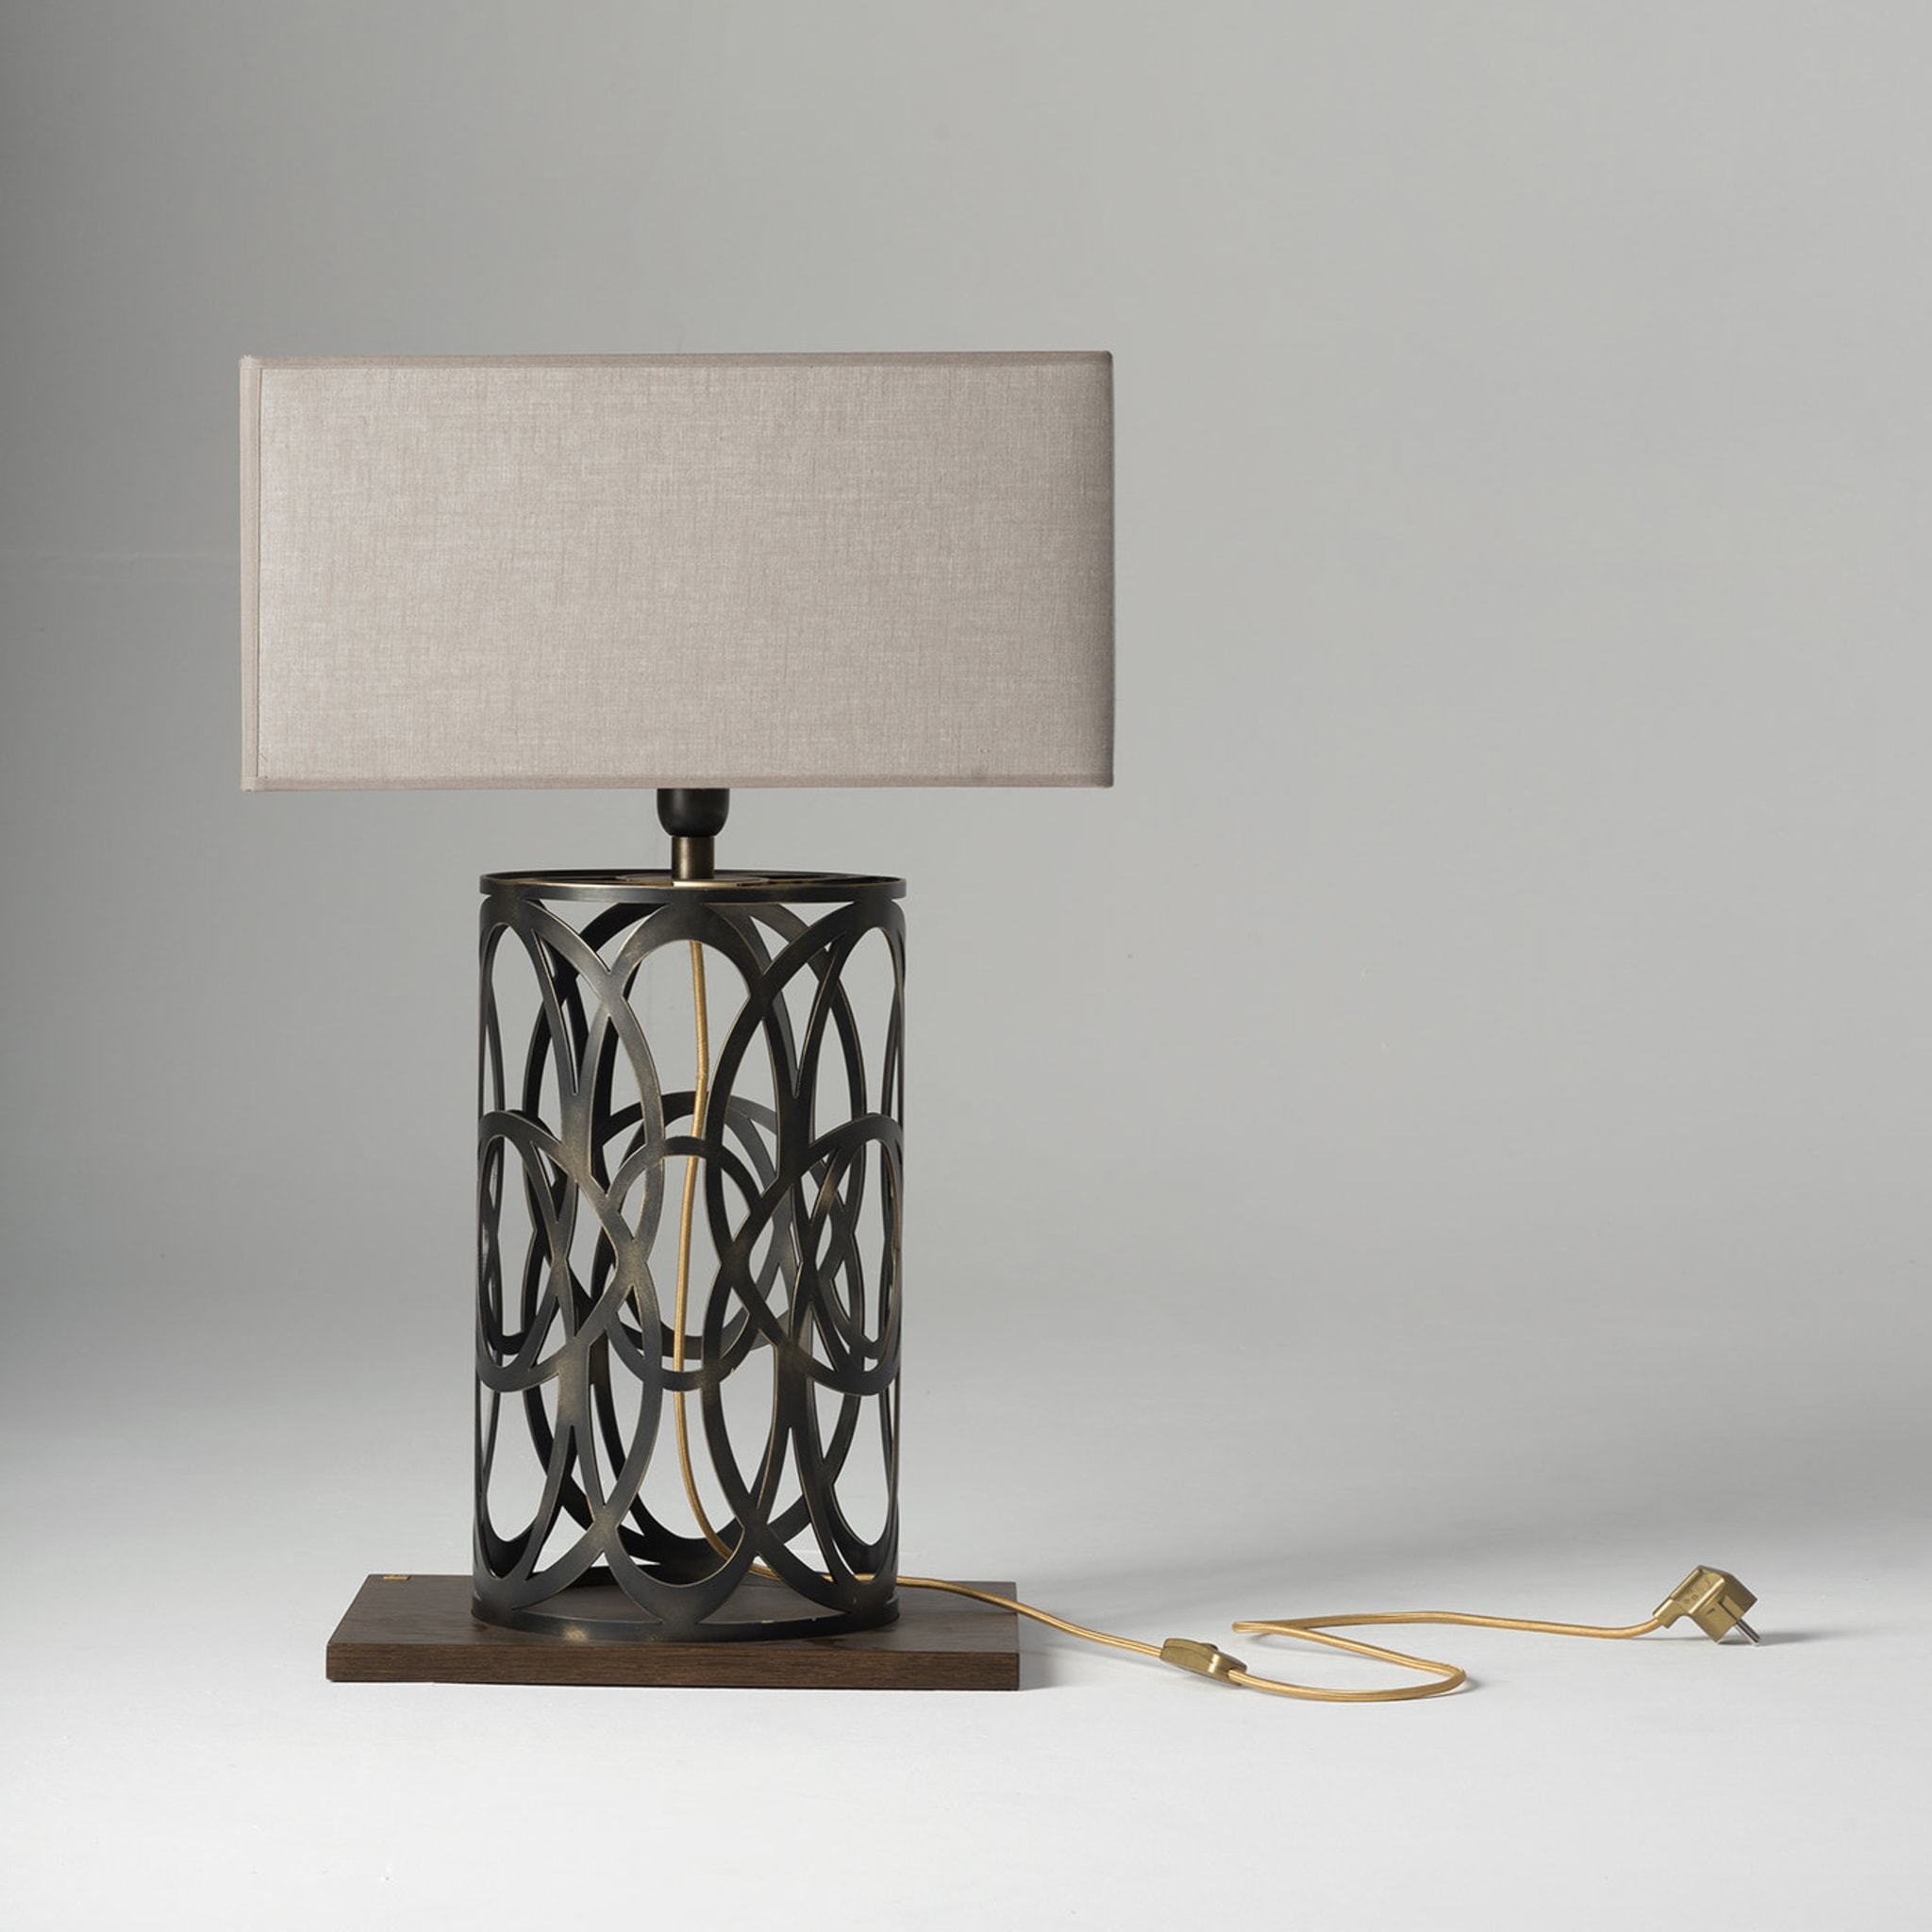 Lampe de table Violante Collection Tribeca par Marco et Giulio Mantellassi - Vue alternative 1